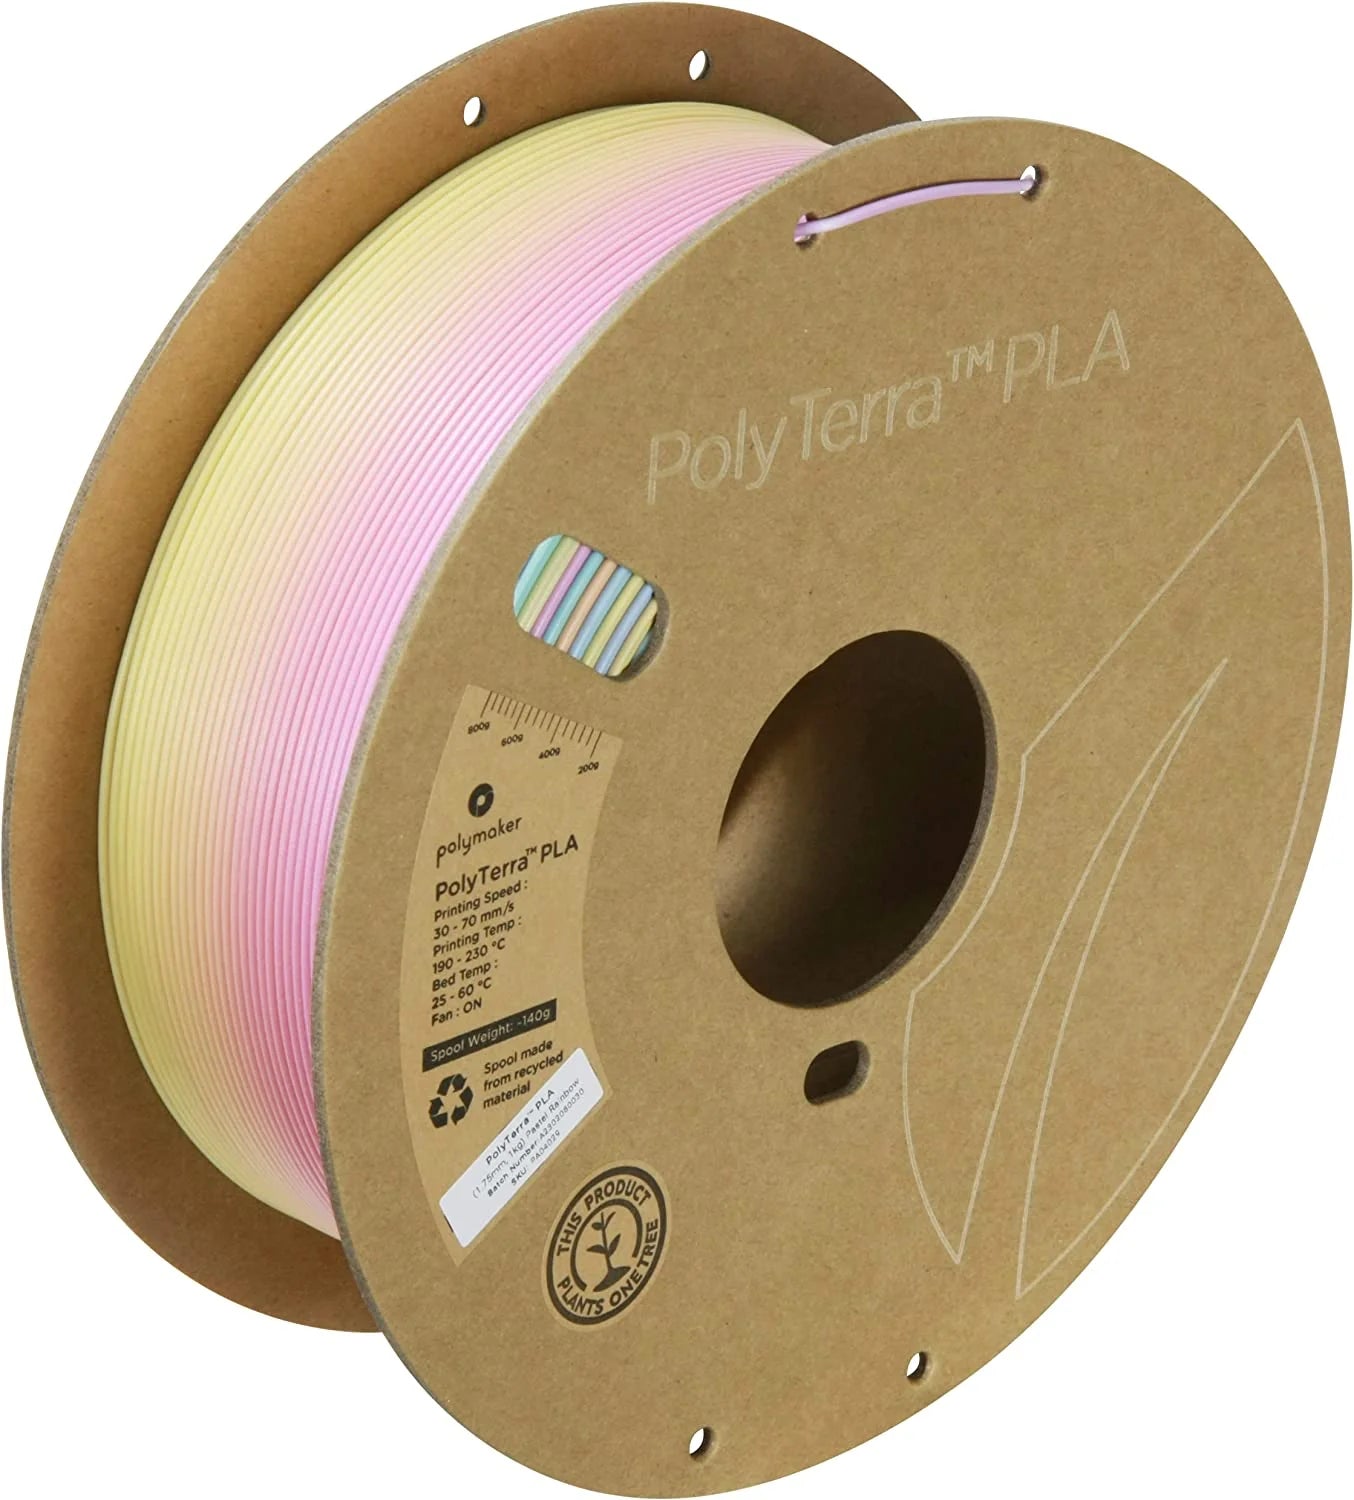 Polymaker PolyTerra PLA - Pastel Rainbow